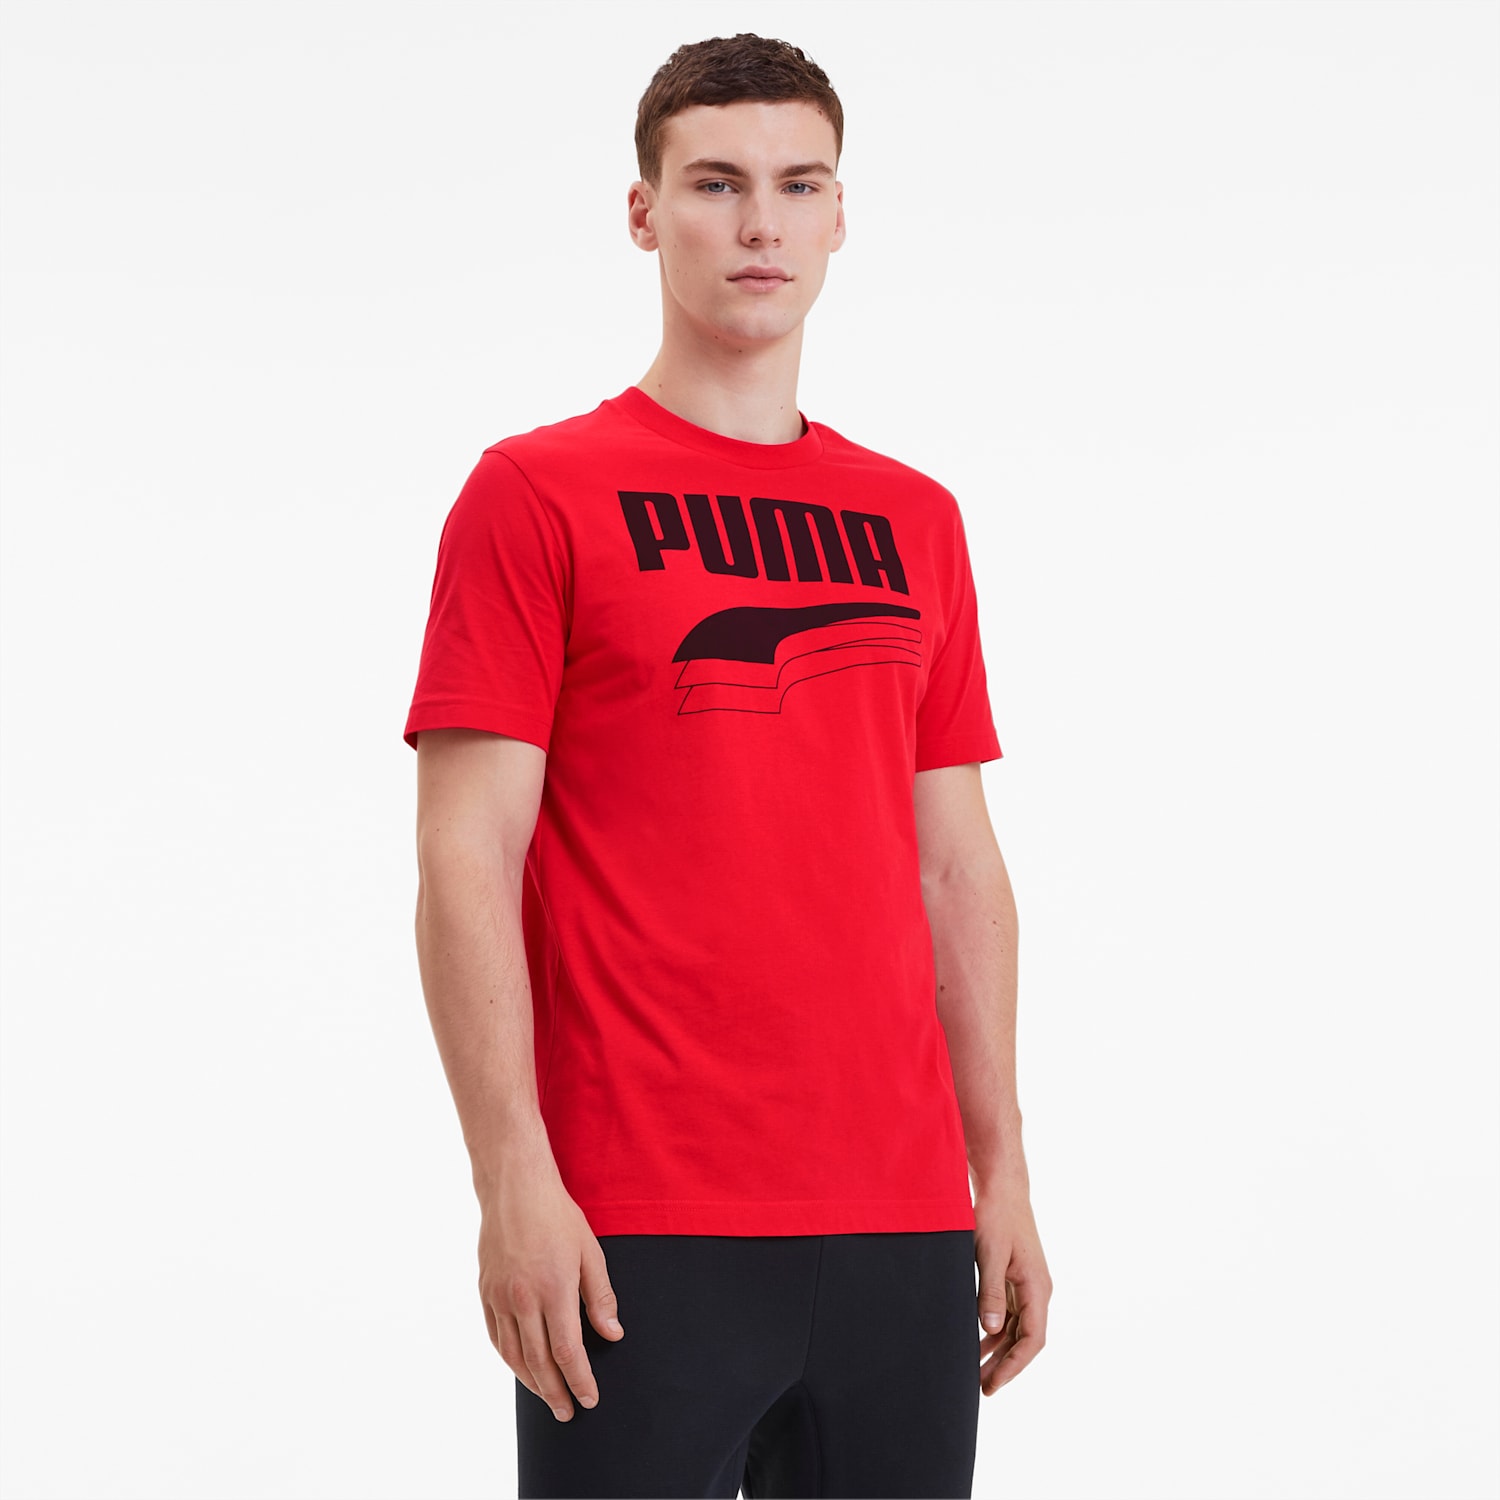 PUMA red T-shirt